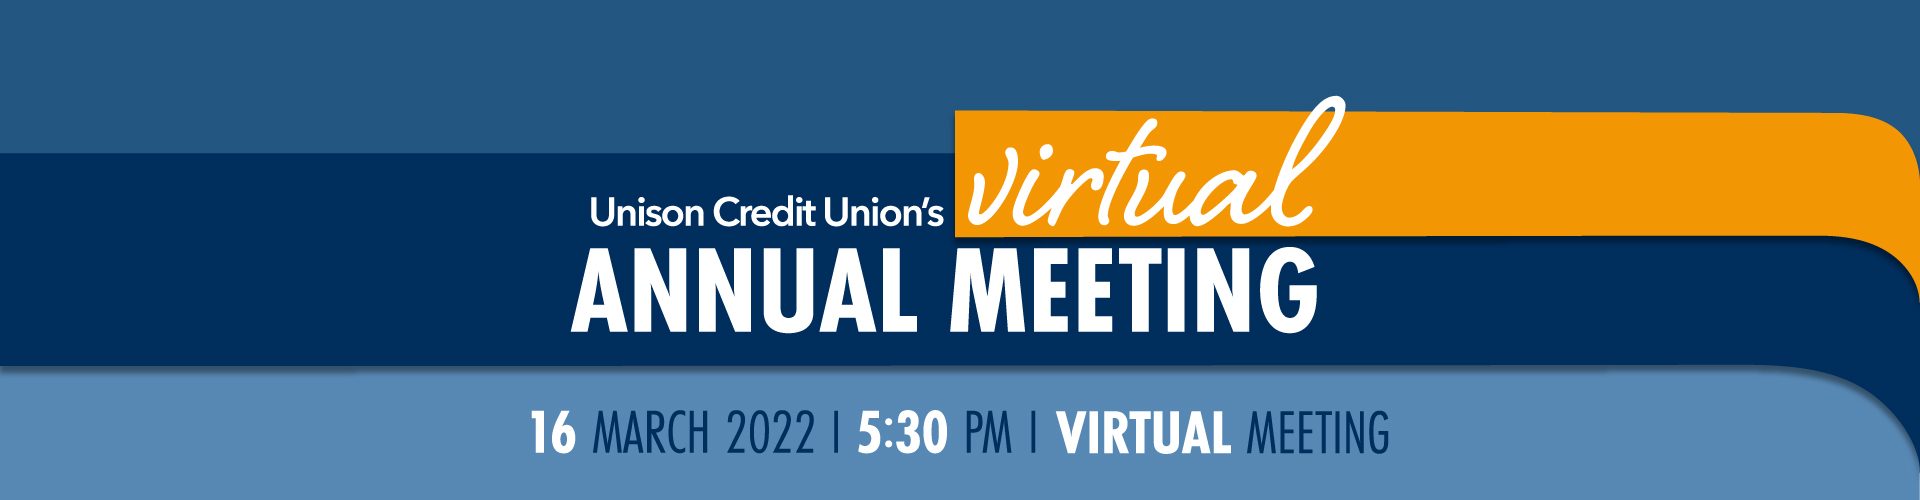 Unison Credit Union Annual Meeting graphic